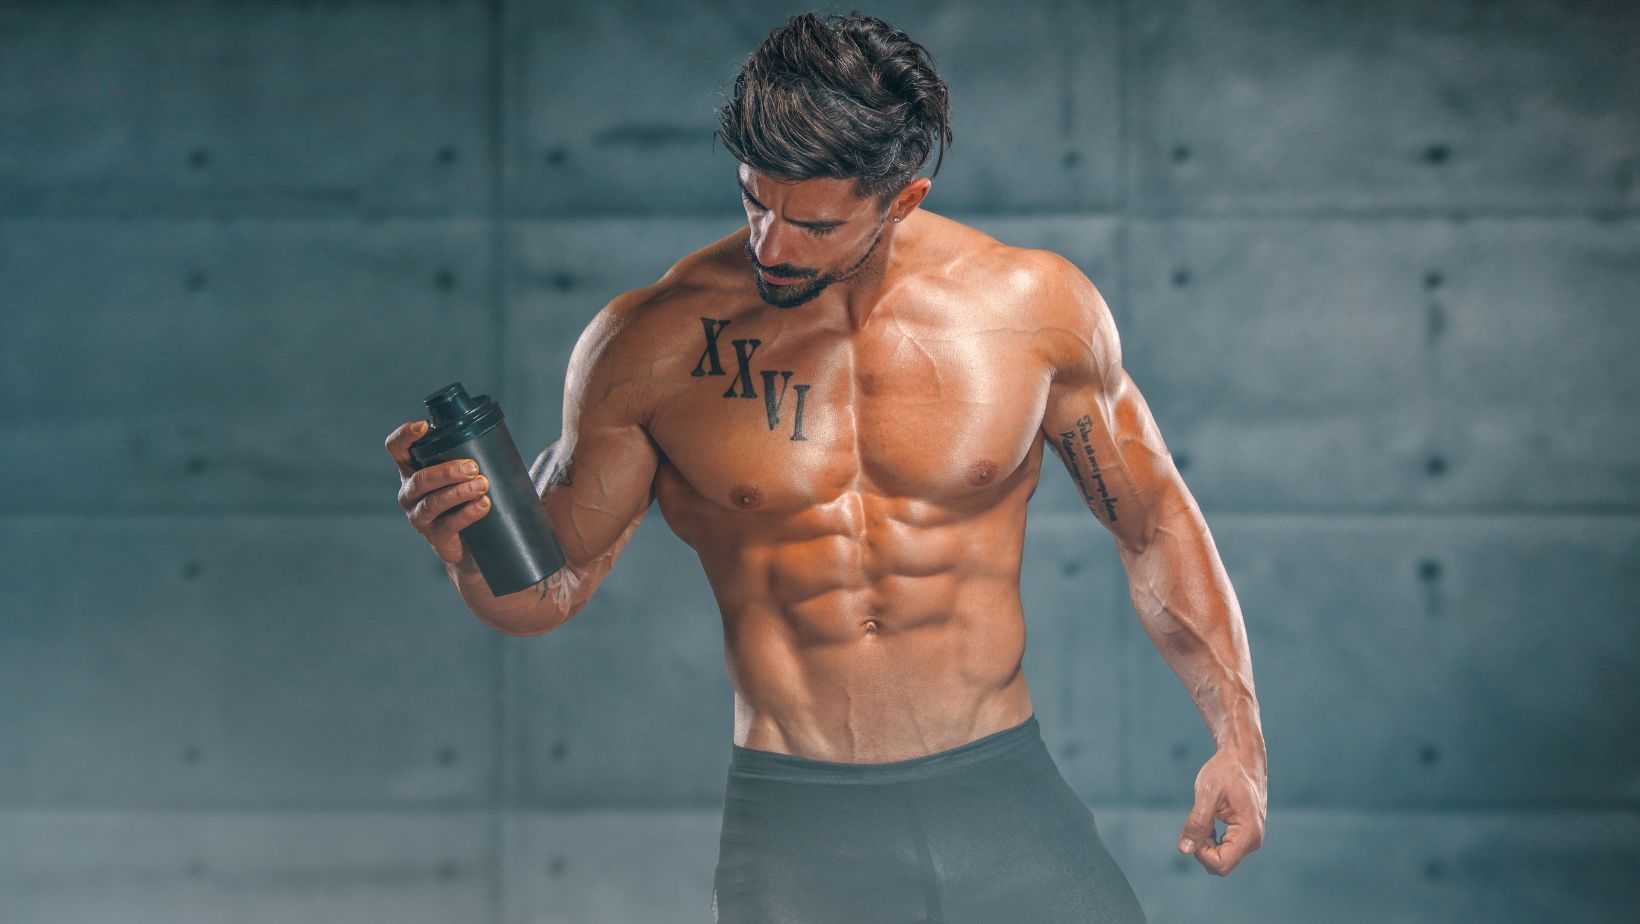 A muscular man holding a bottle of supplements.